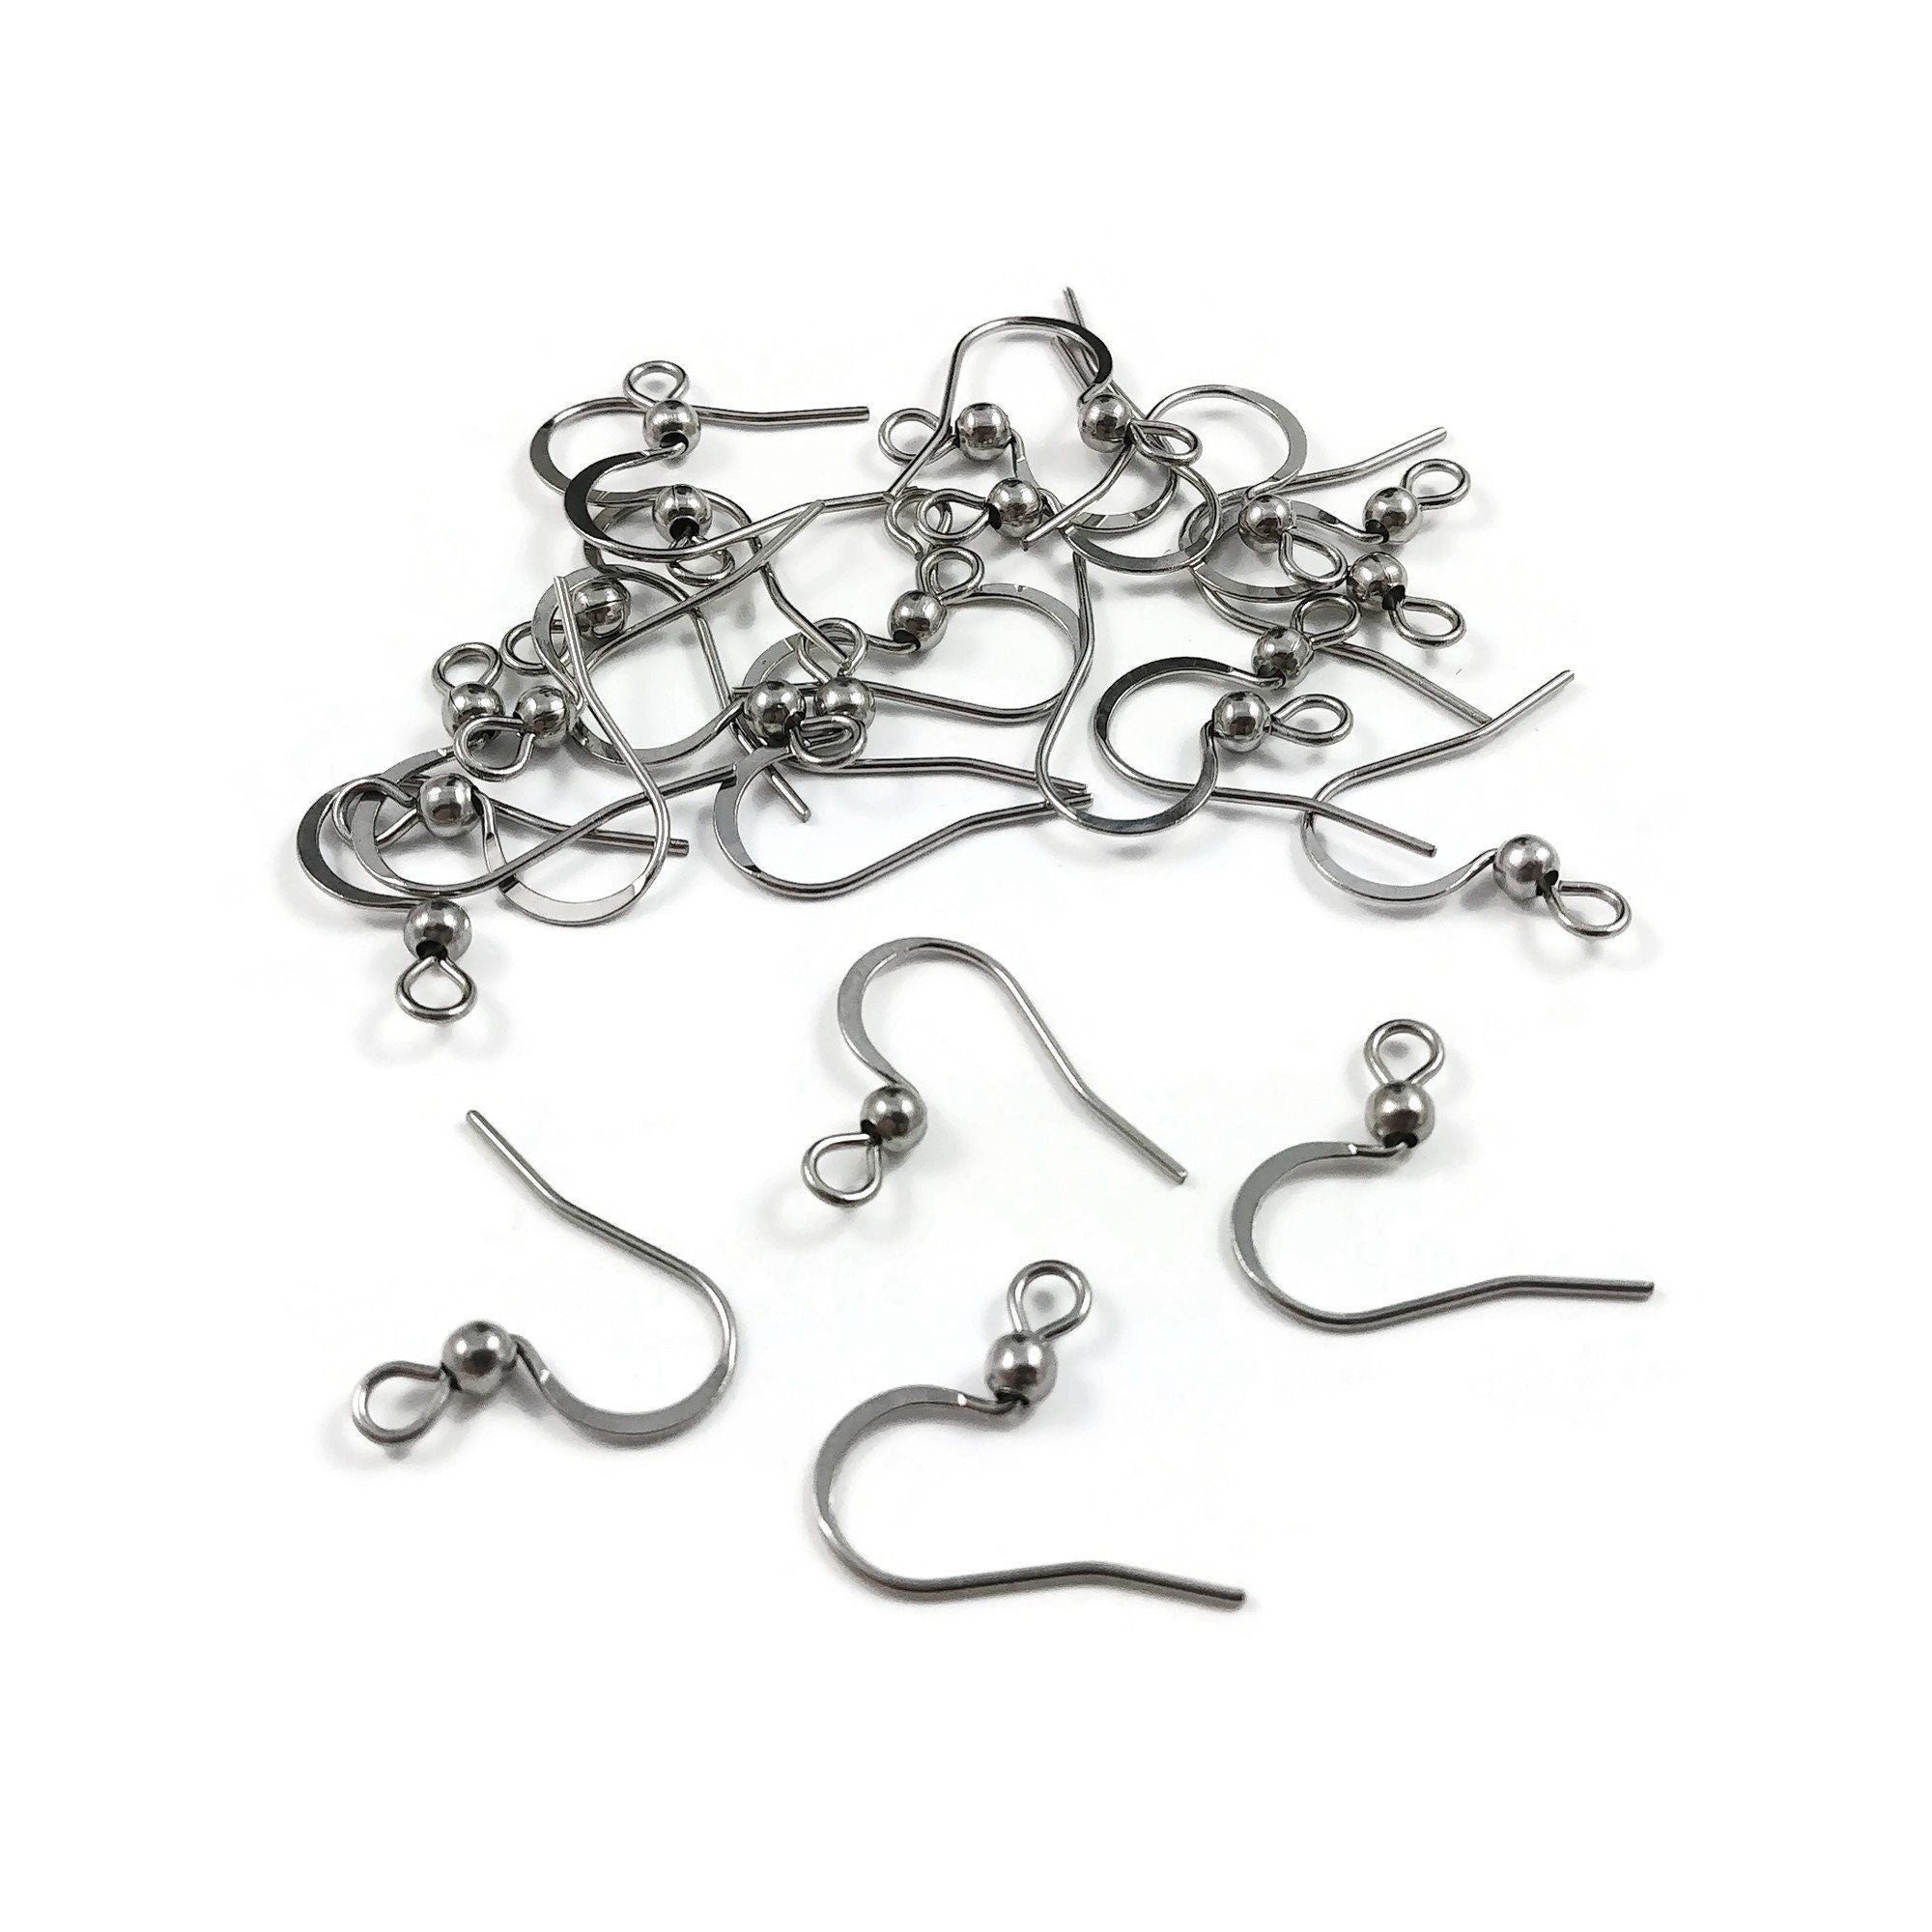 20pcs/lot Stainless Steel Stud Earring Connectors Post 5x8mm Hypoallergenic Earrings  Backs Stopper Making For Jewelry